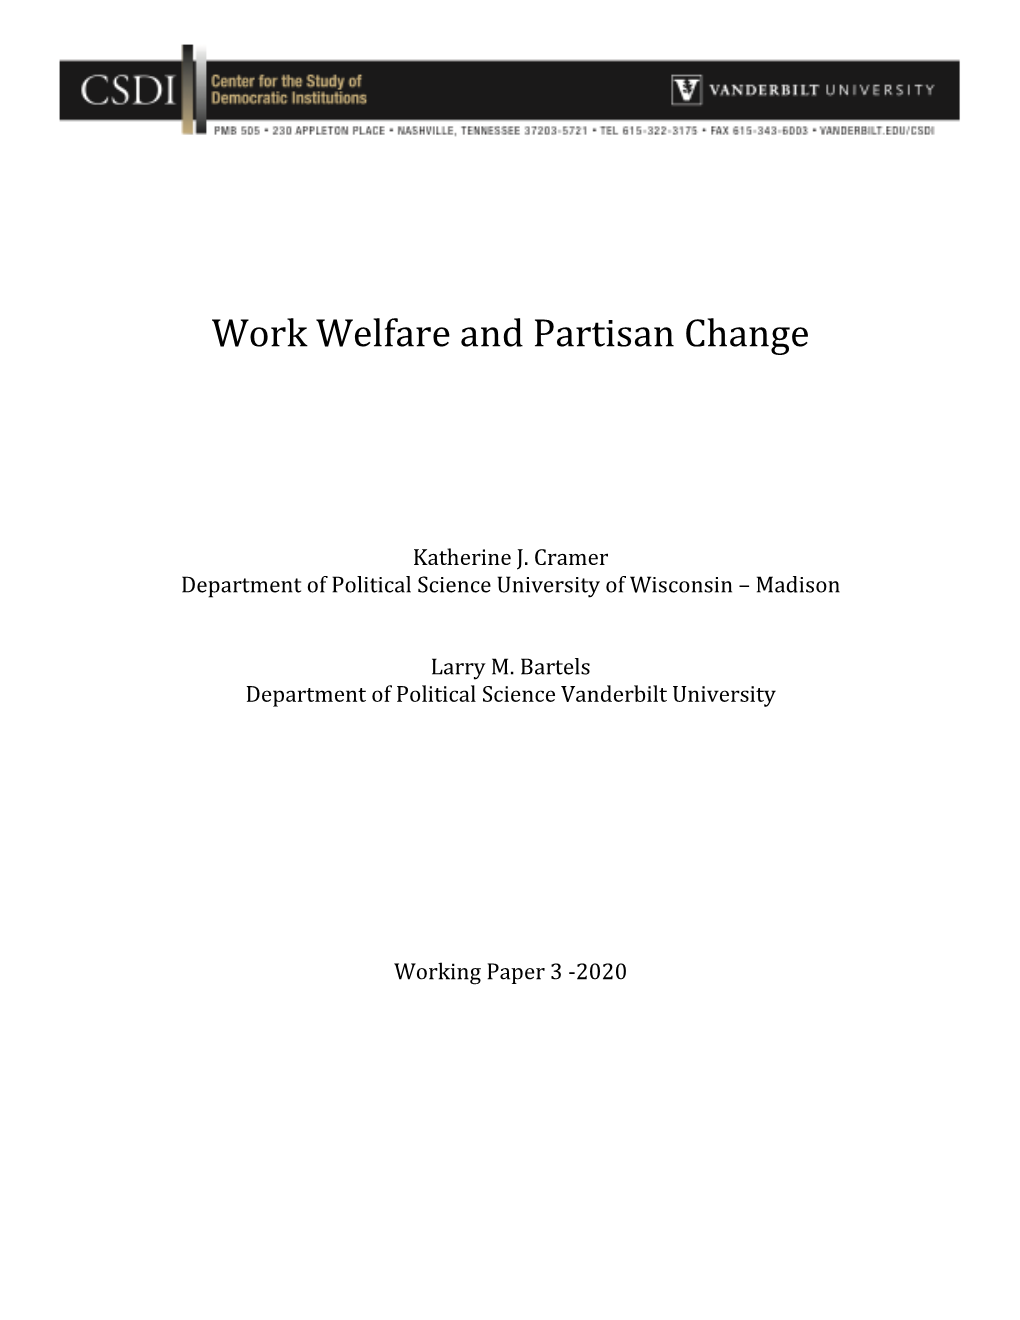 Work Welfare and Partisan Change